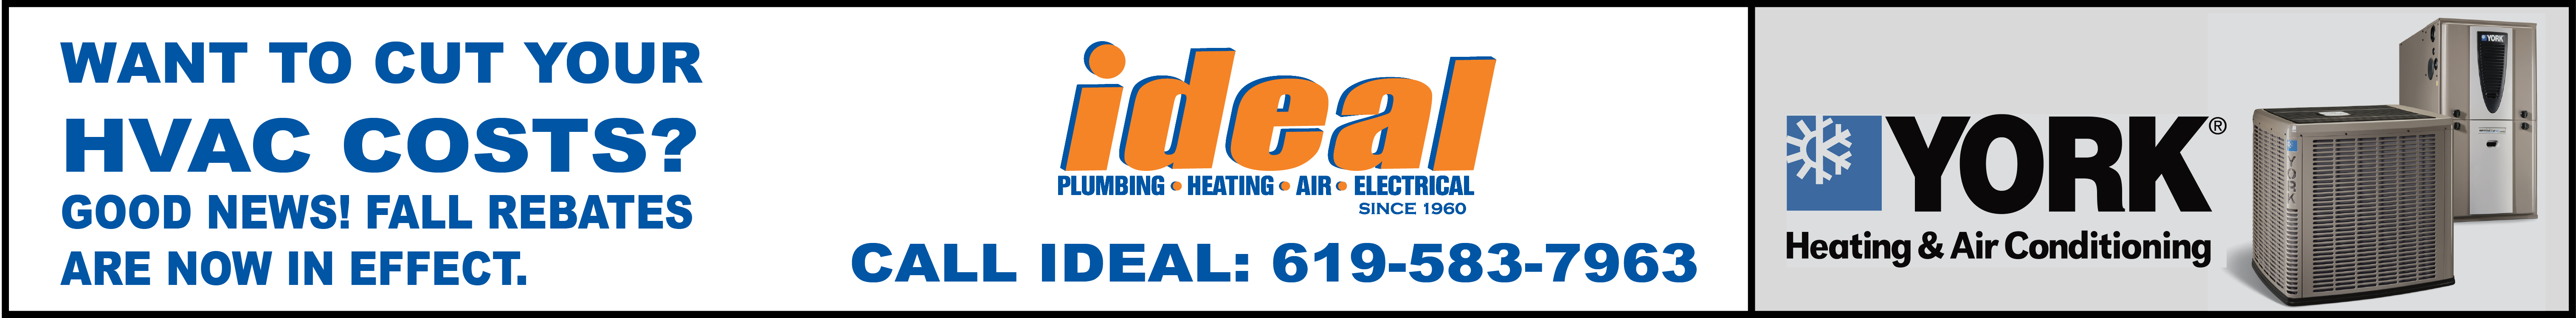 york-heating-air-conditioning-rebates-ideal-service